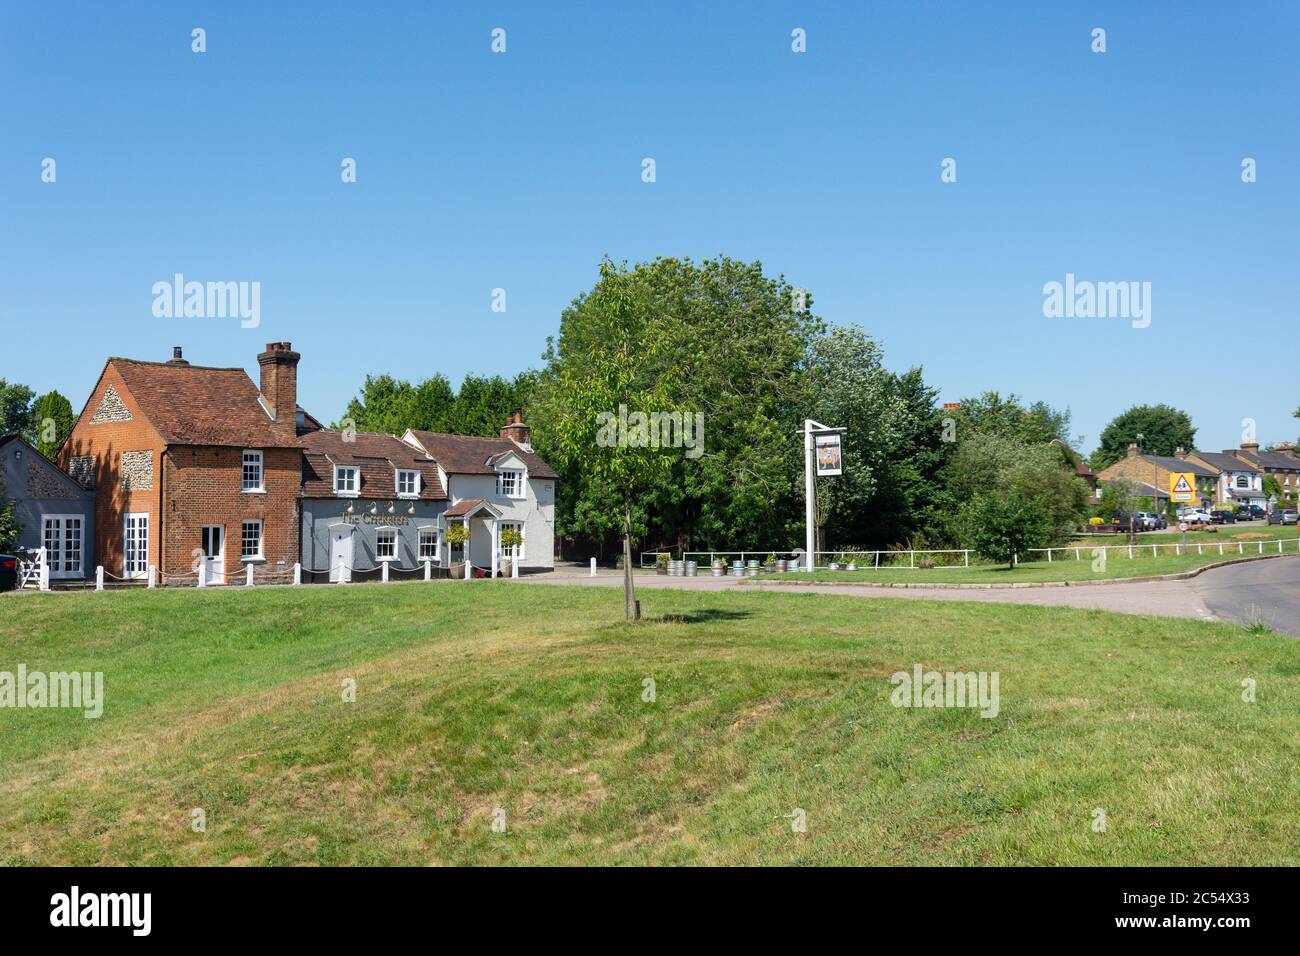 The Cricketers Pub, The Green, Sarratt, Hertfordshire, England, United Kingdom Stock Photo